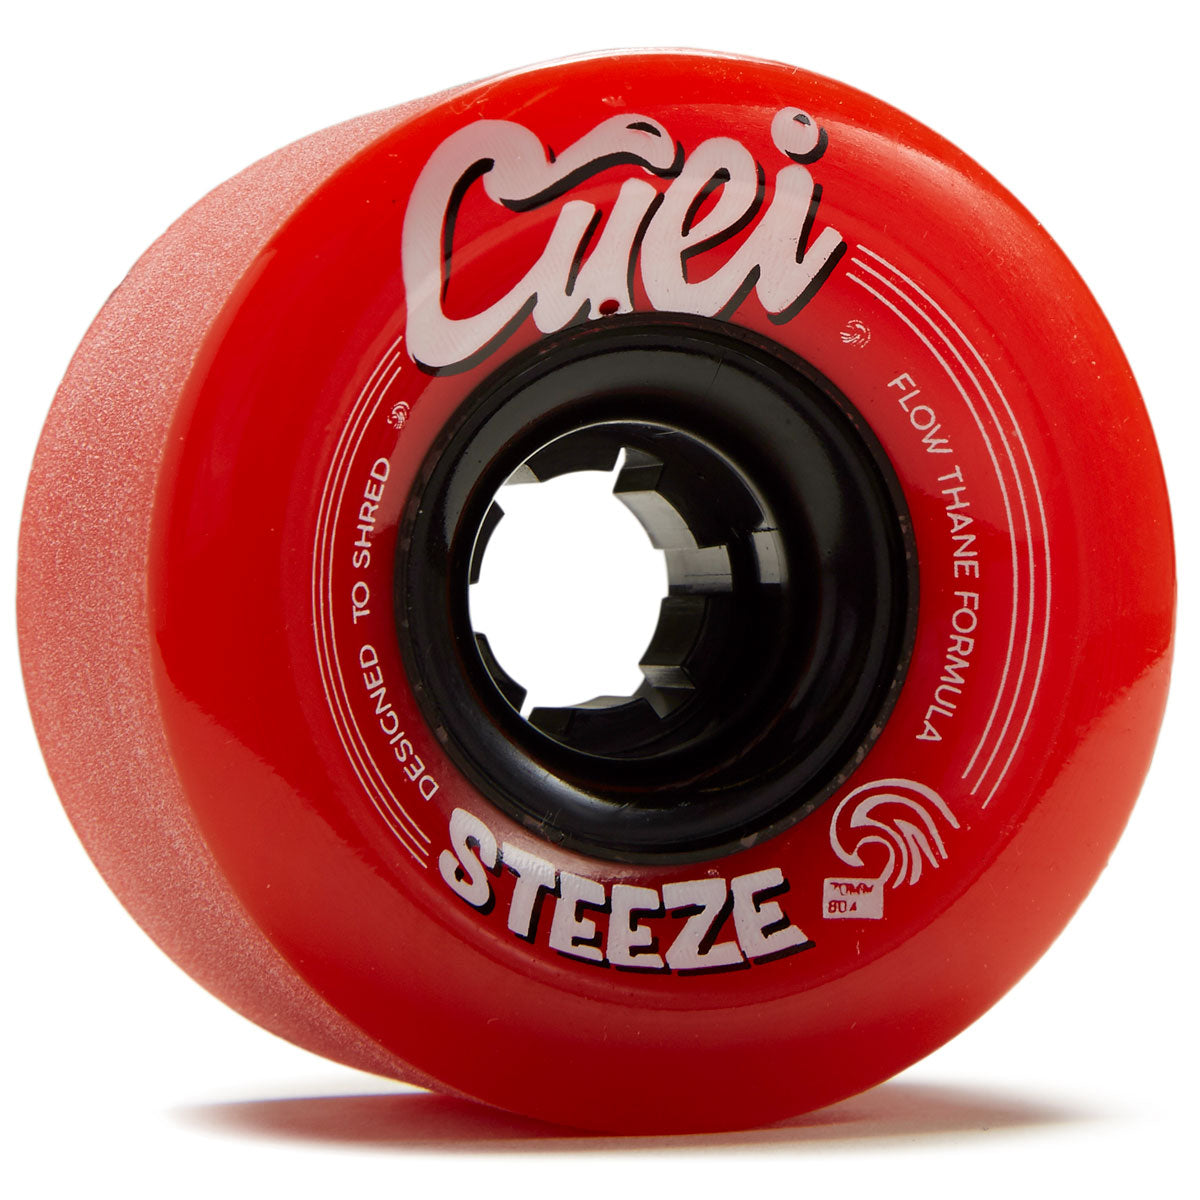 Cuei Steeze Freeride 80a Stoneground Longboard Wheels - Red - 70mm image 1